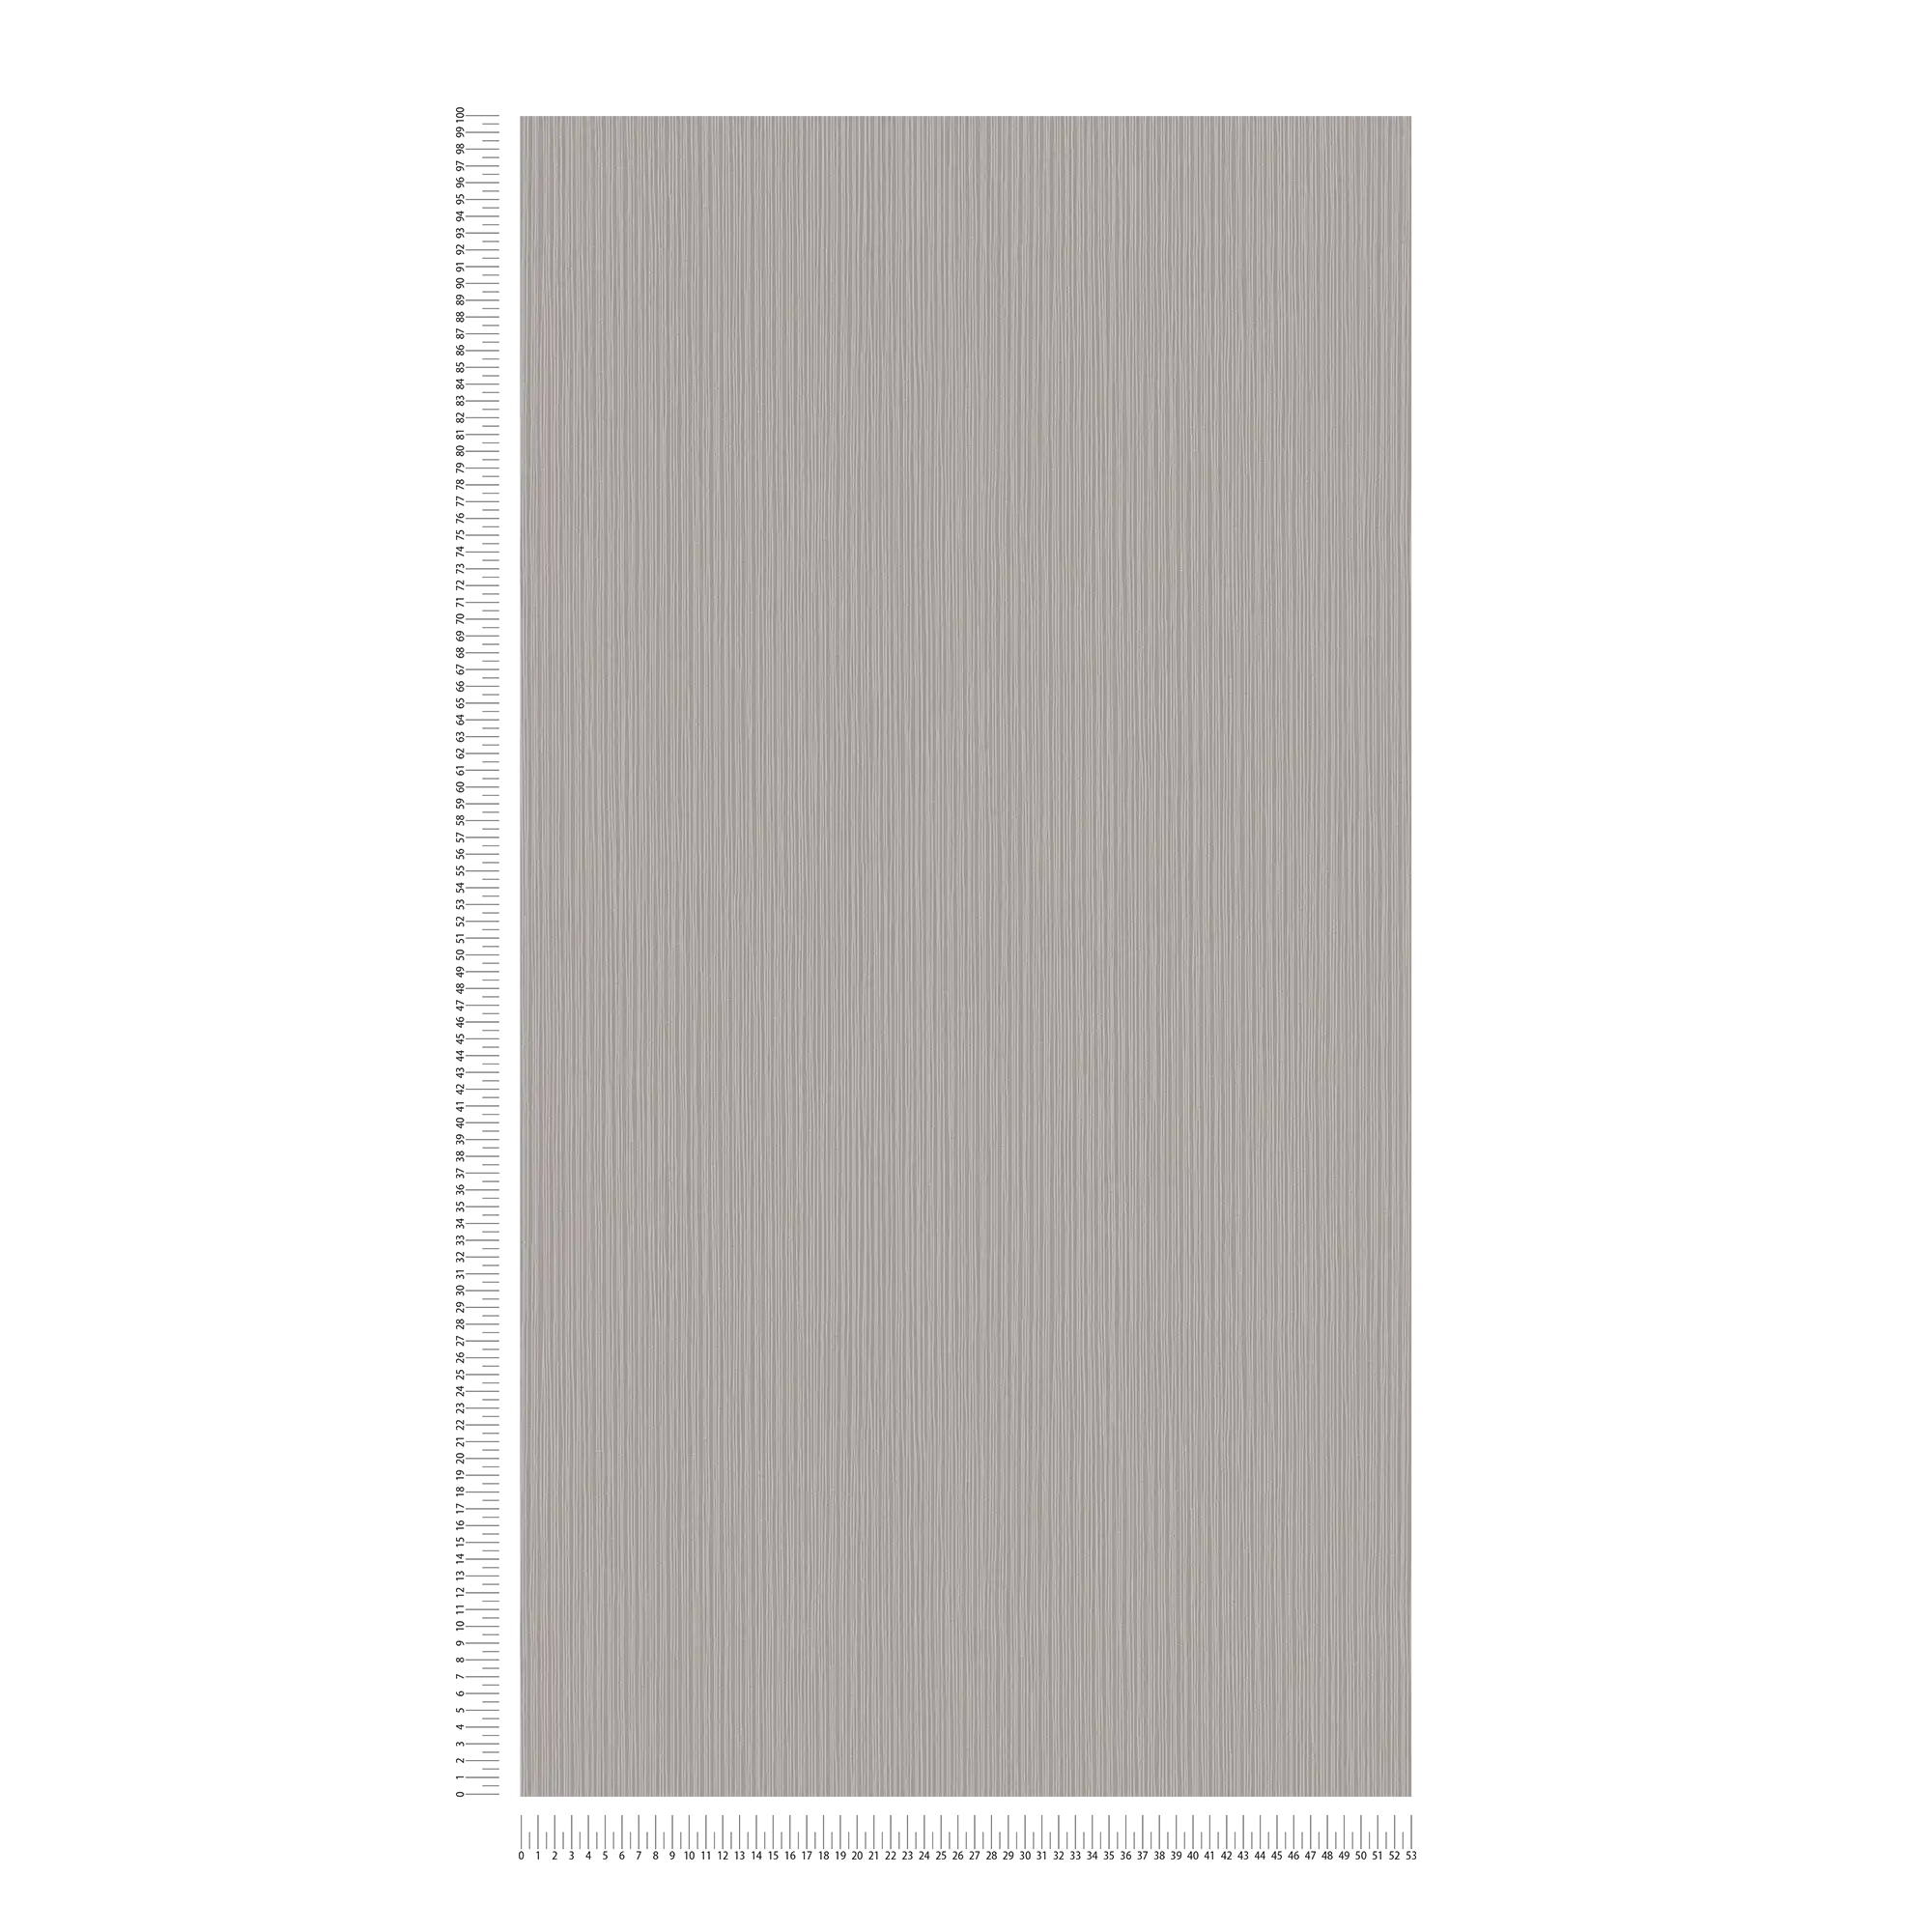             Non-woven wallpaper grey plain, narrow lines pattern
        